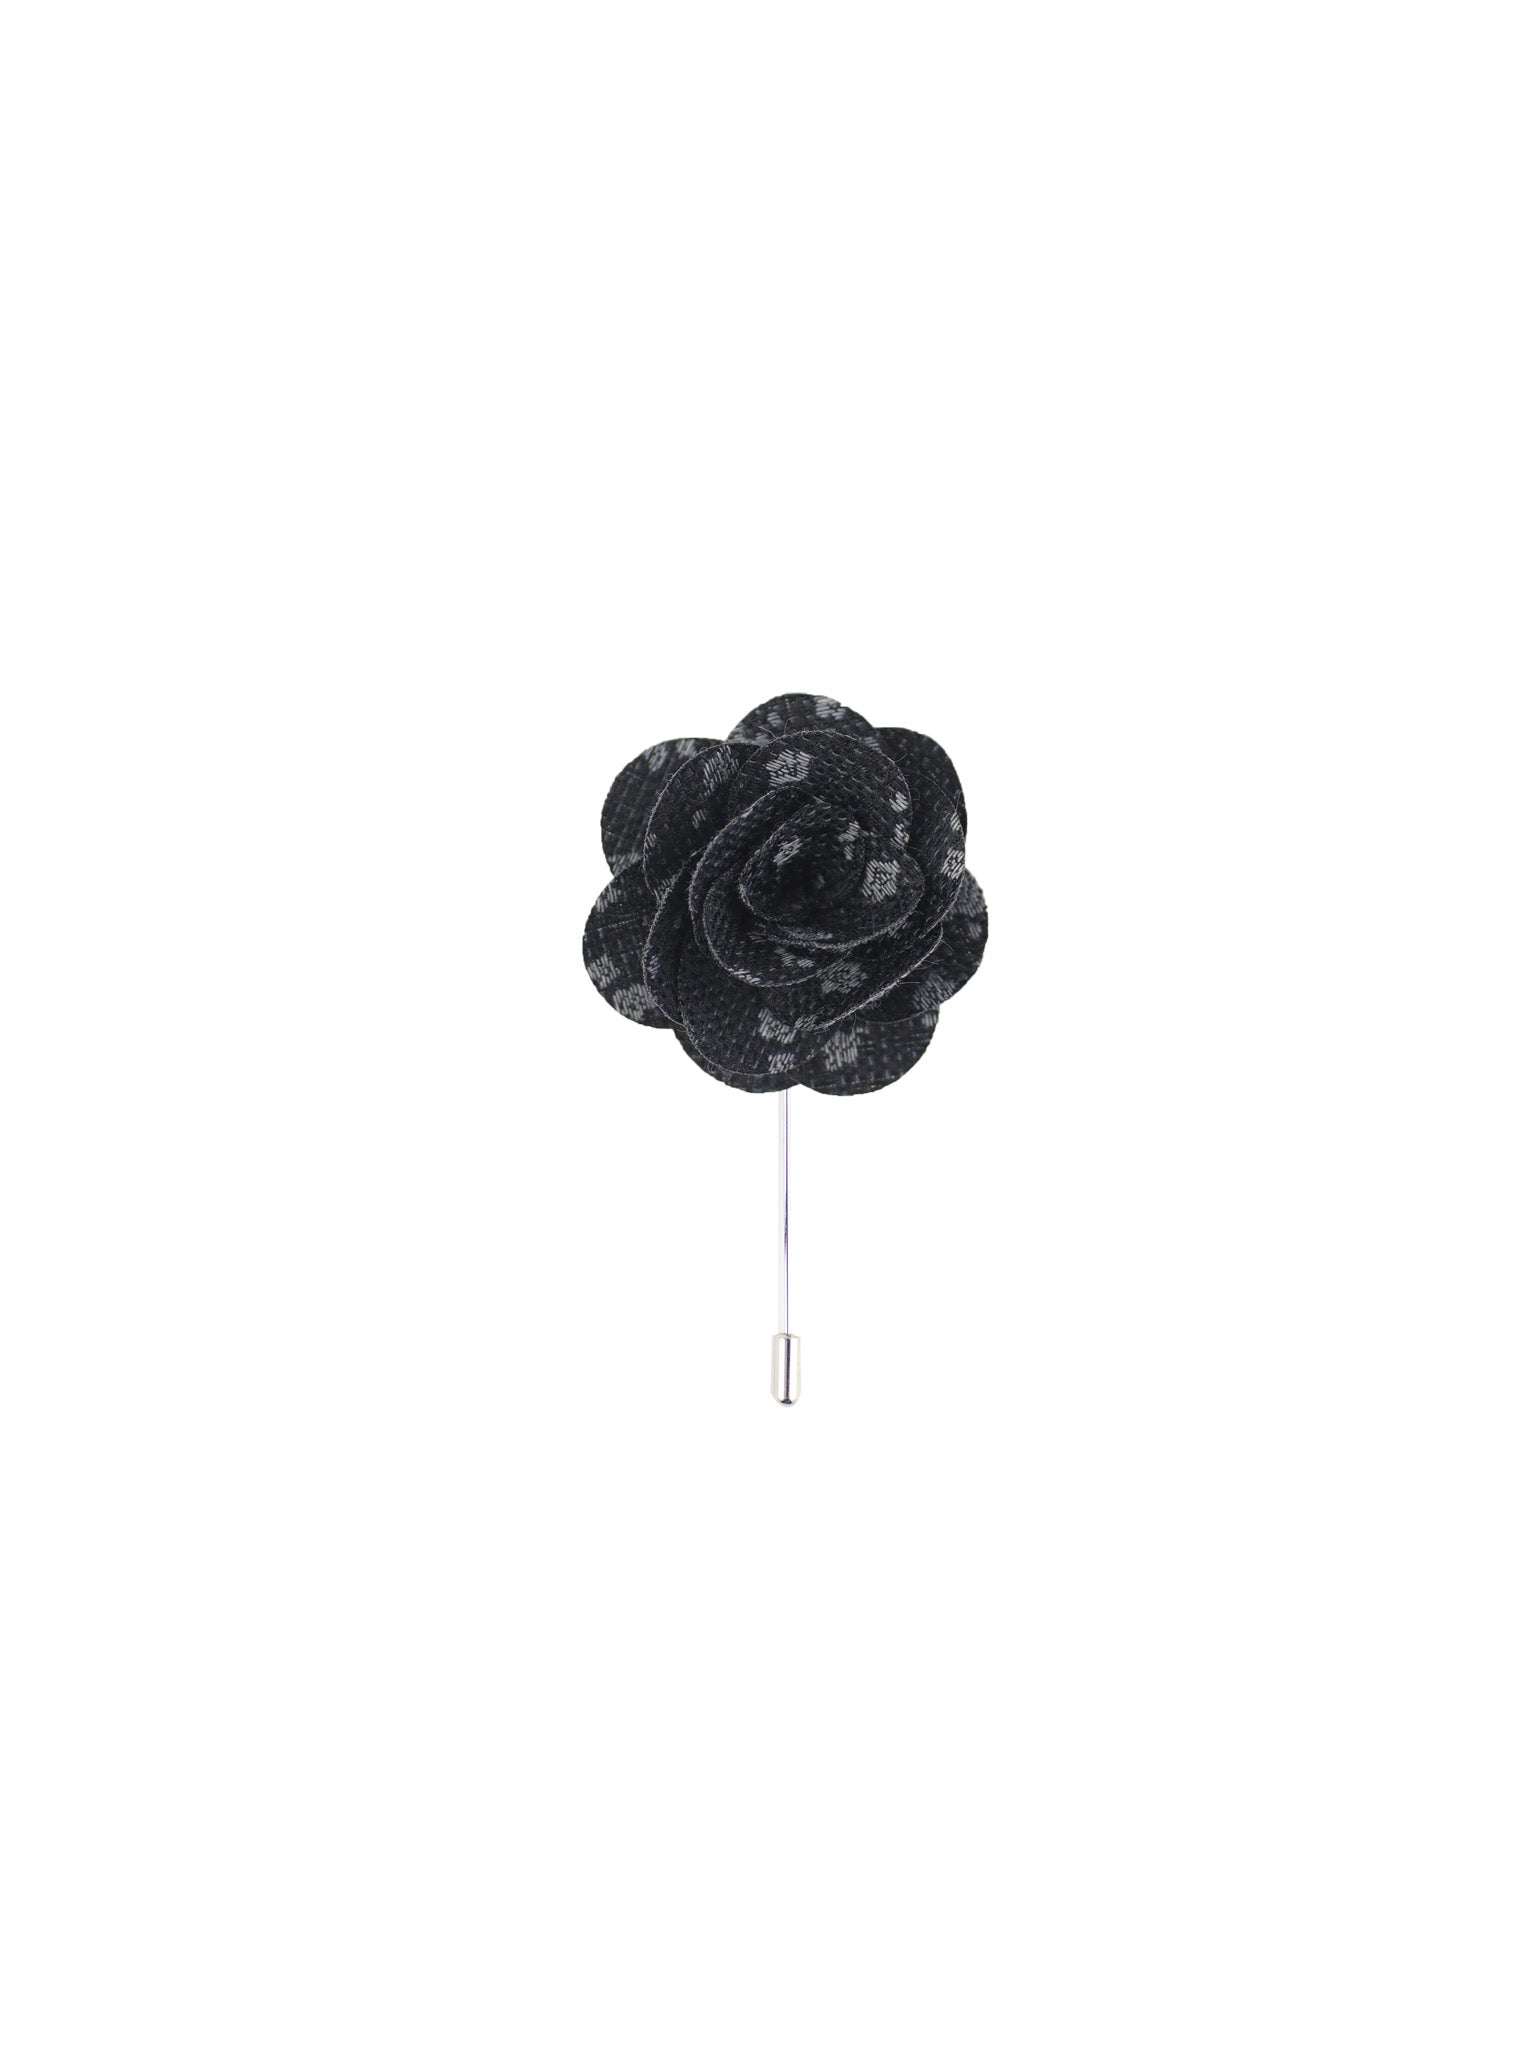 Black & Silver Floral Lapel Pin from DIBI